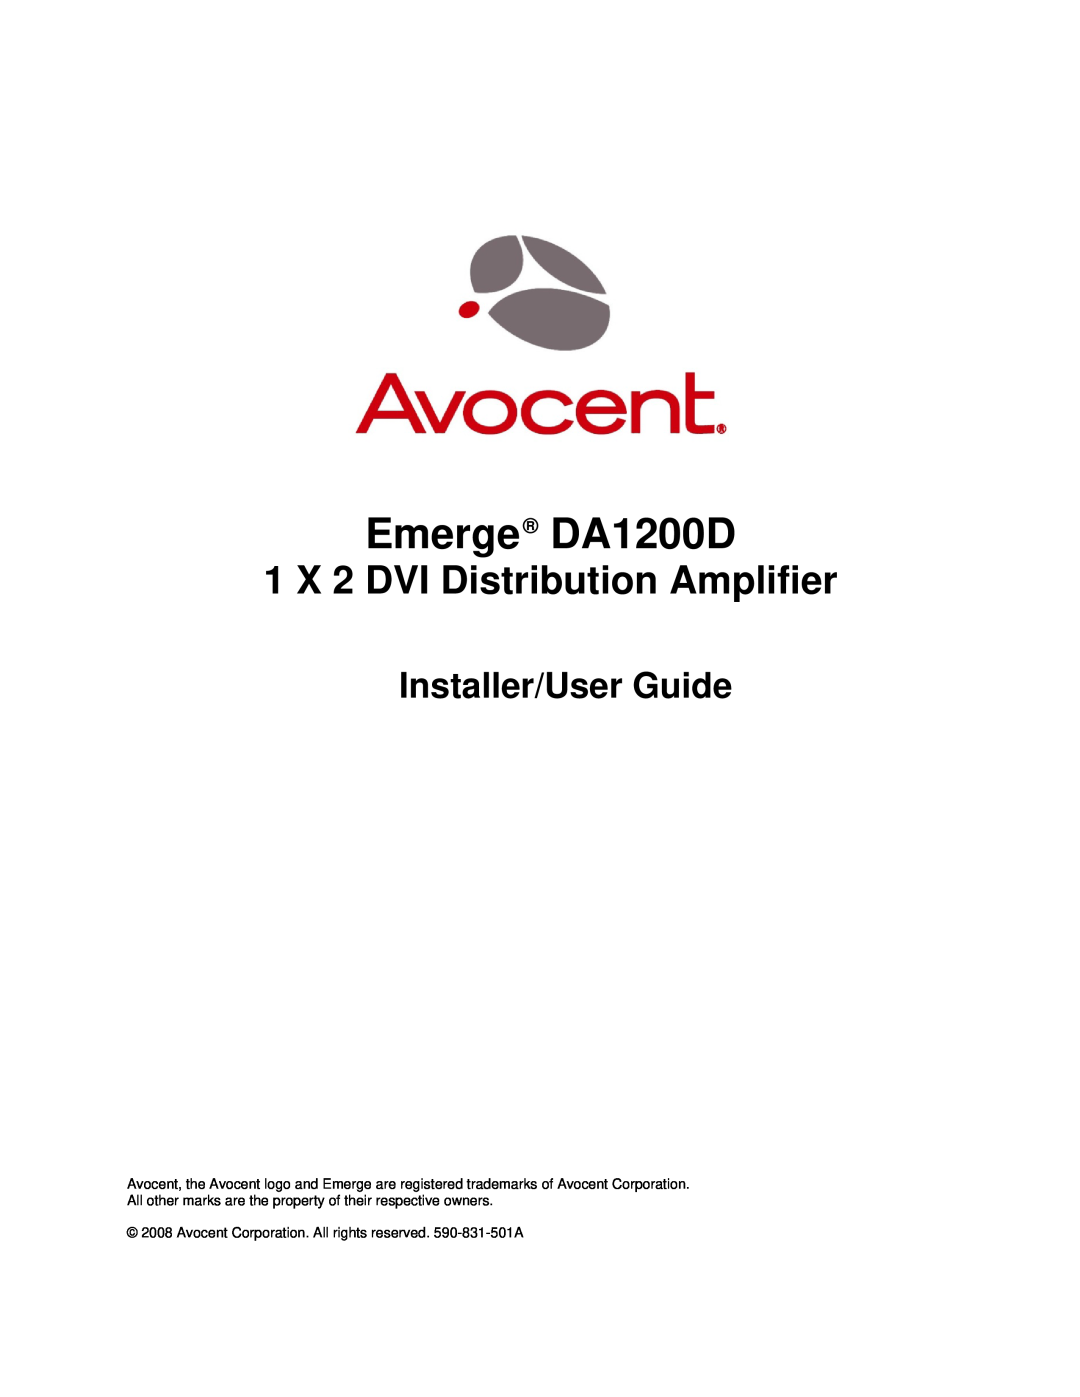 Avocent manual 1 X 2 DVI Distribution Amplifier, Emerge DA1200D, Installer/User Guide 